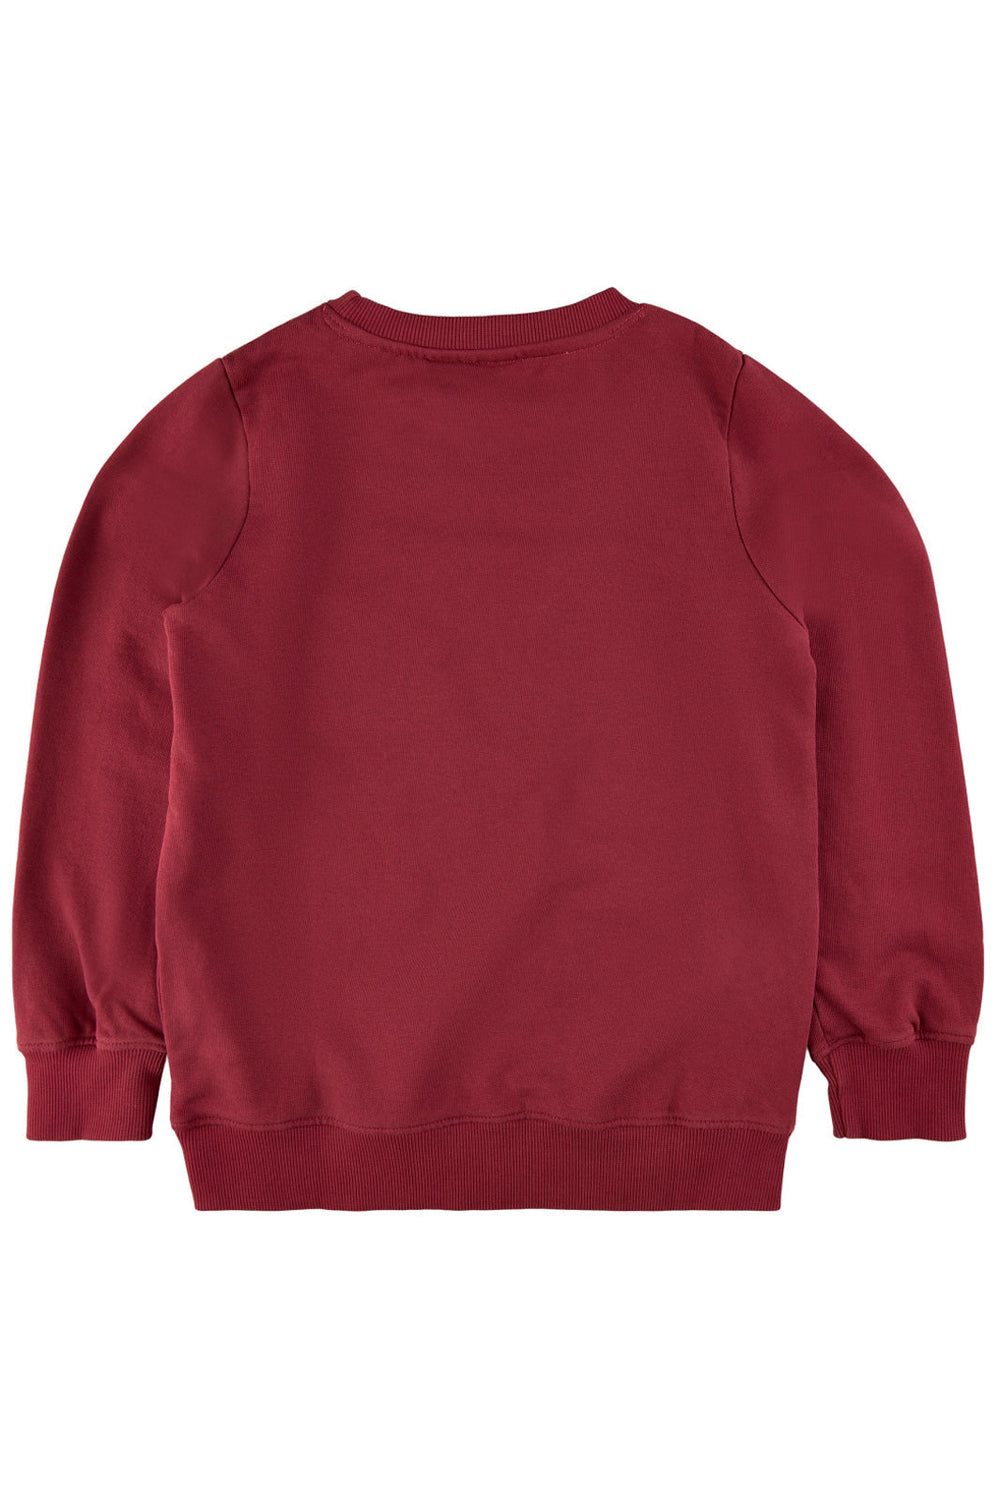 The New - Tndaffodil Sweatshirt - Marron Sweatshirts 